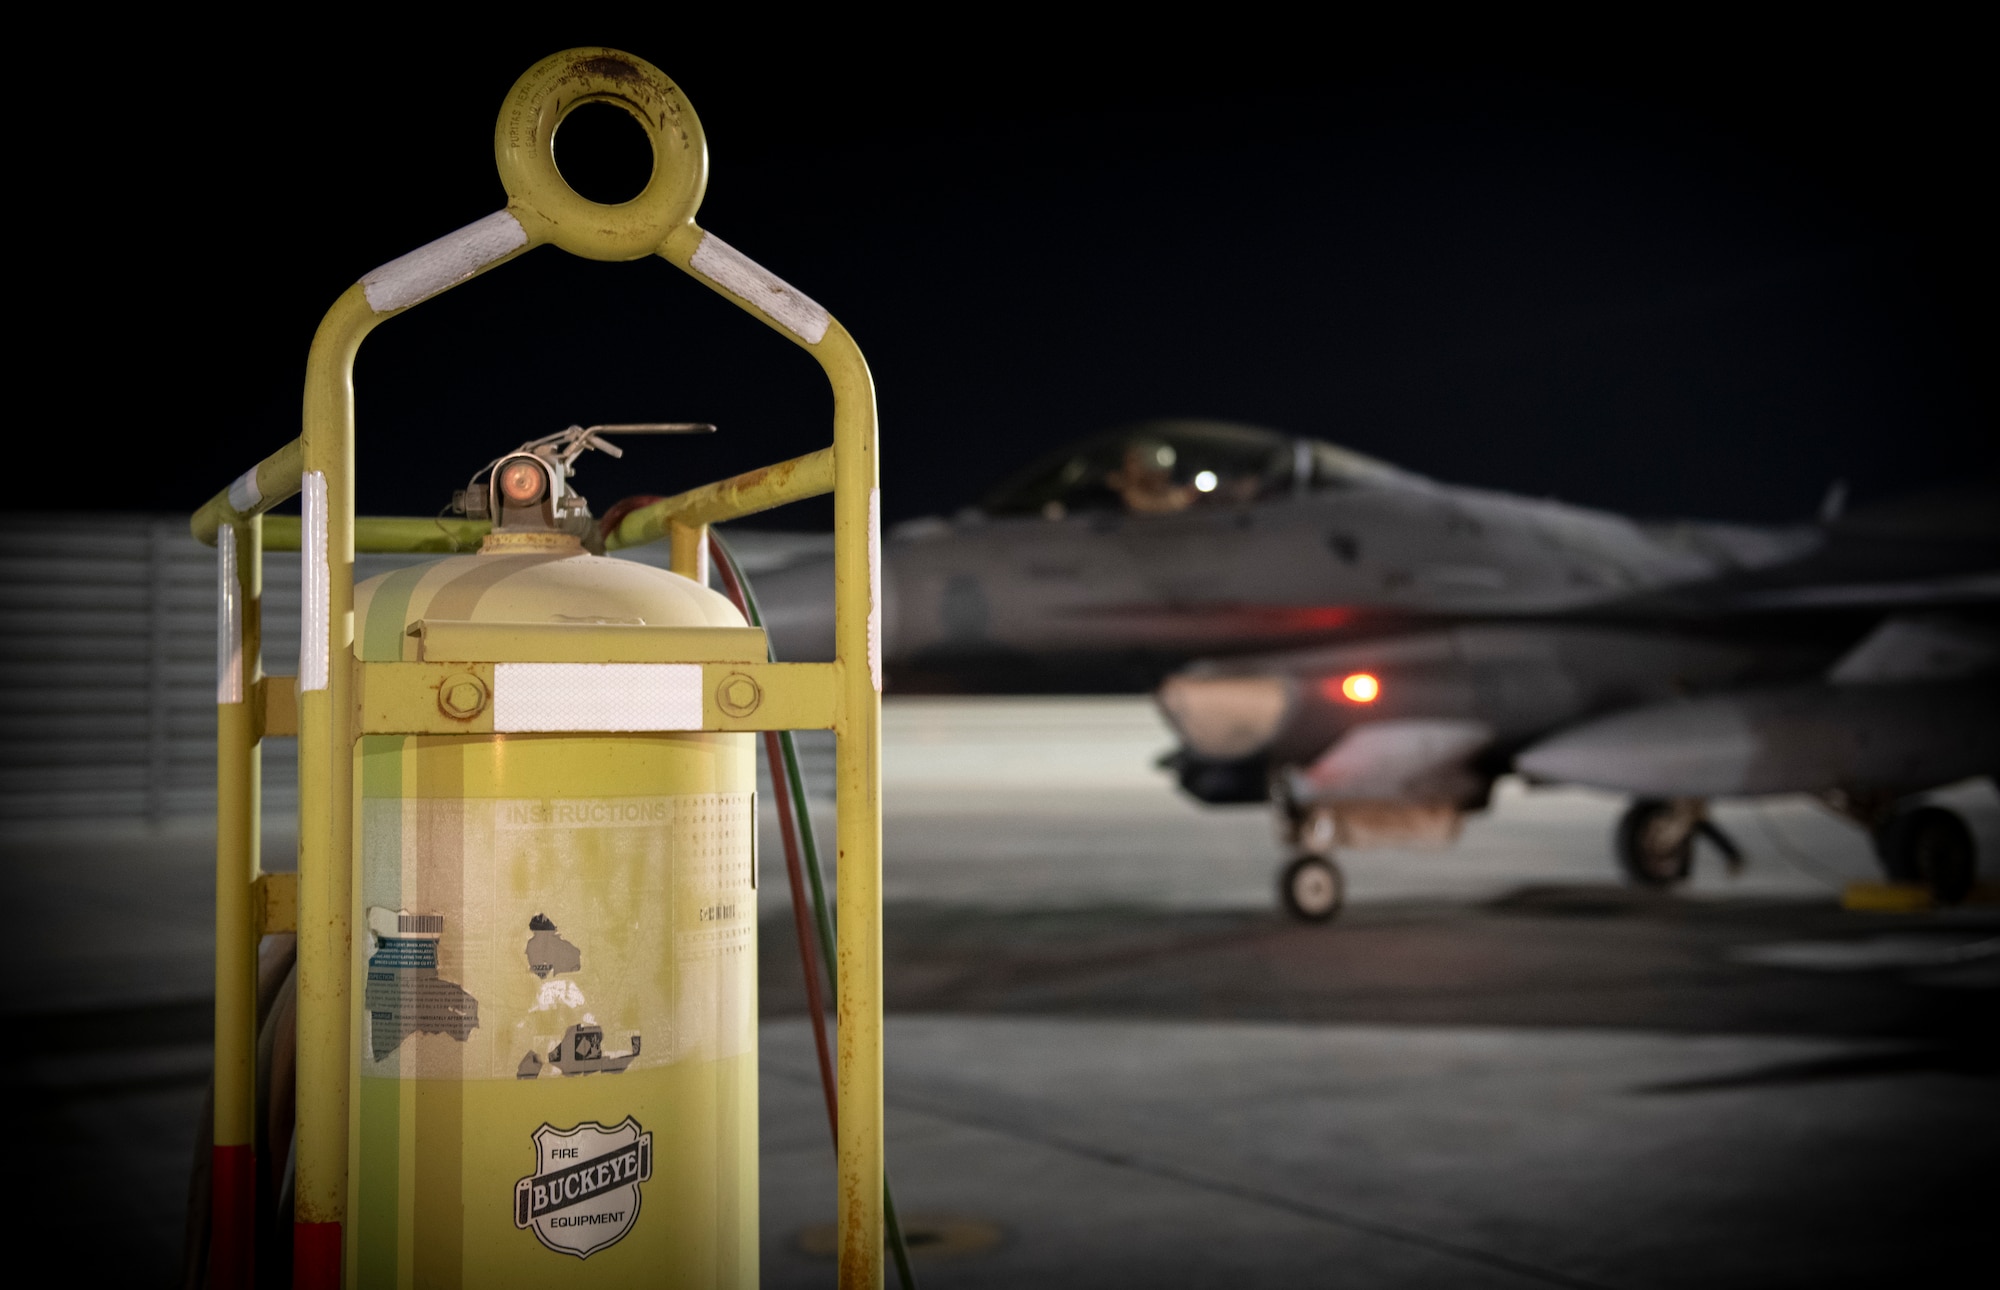 Military jet drives behine flight line fire extinguisher.